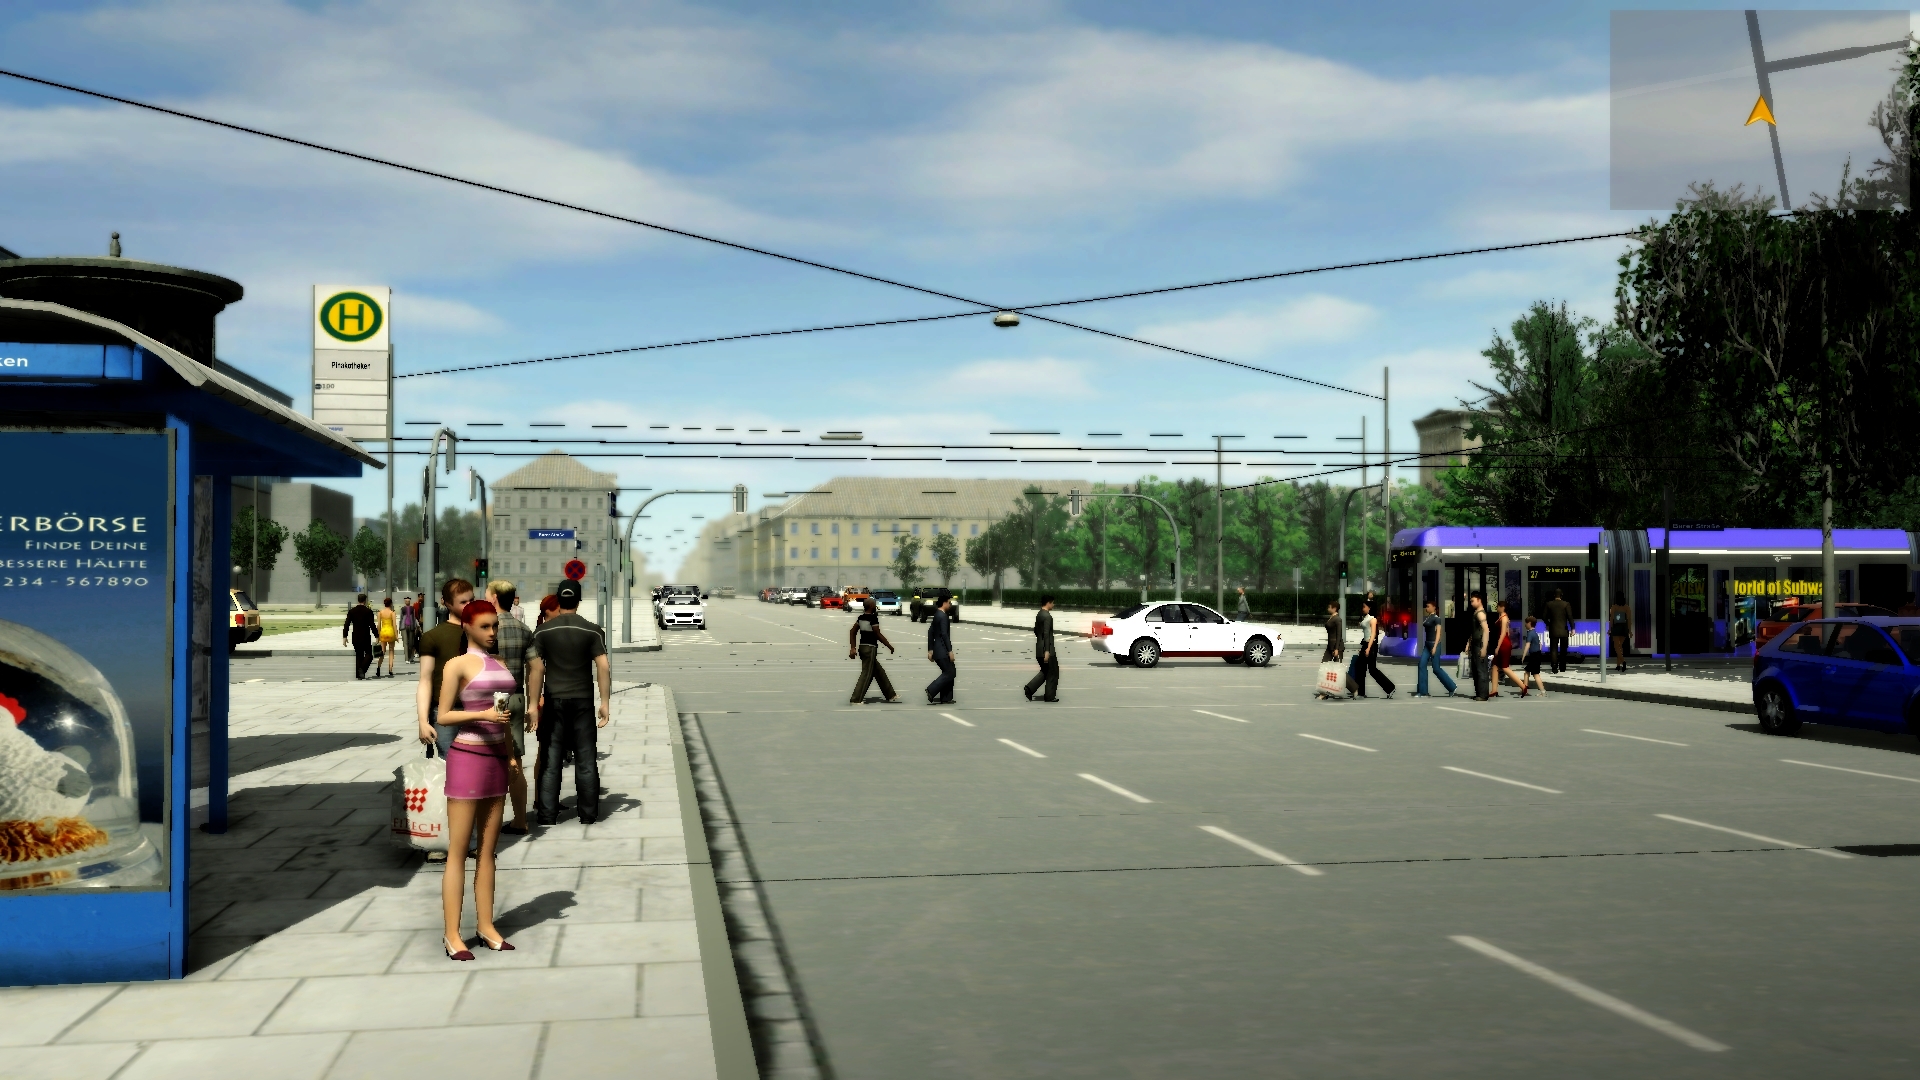 Munich Bus Simulator screenshot